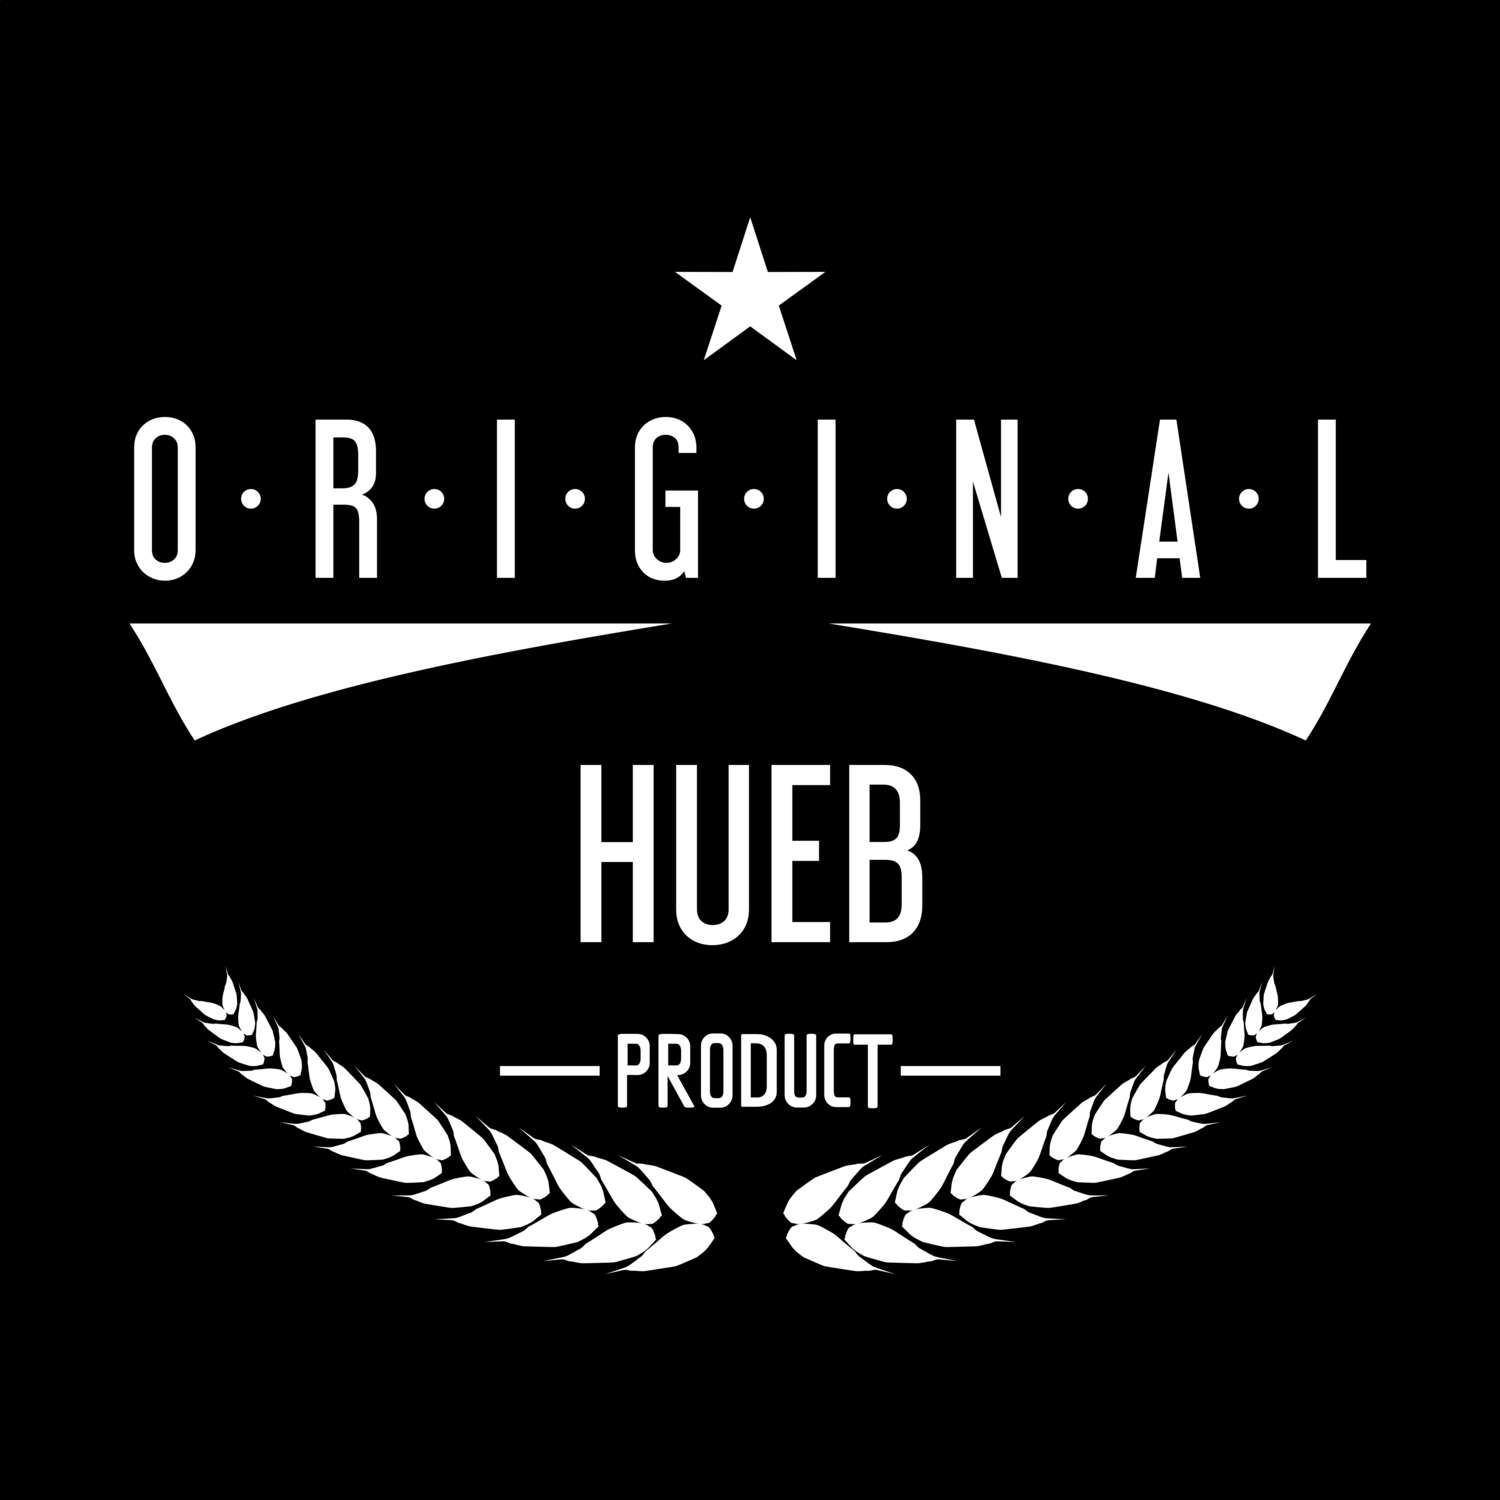 Hueb T-Shirt »Original Product«